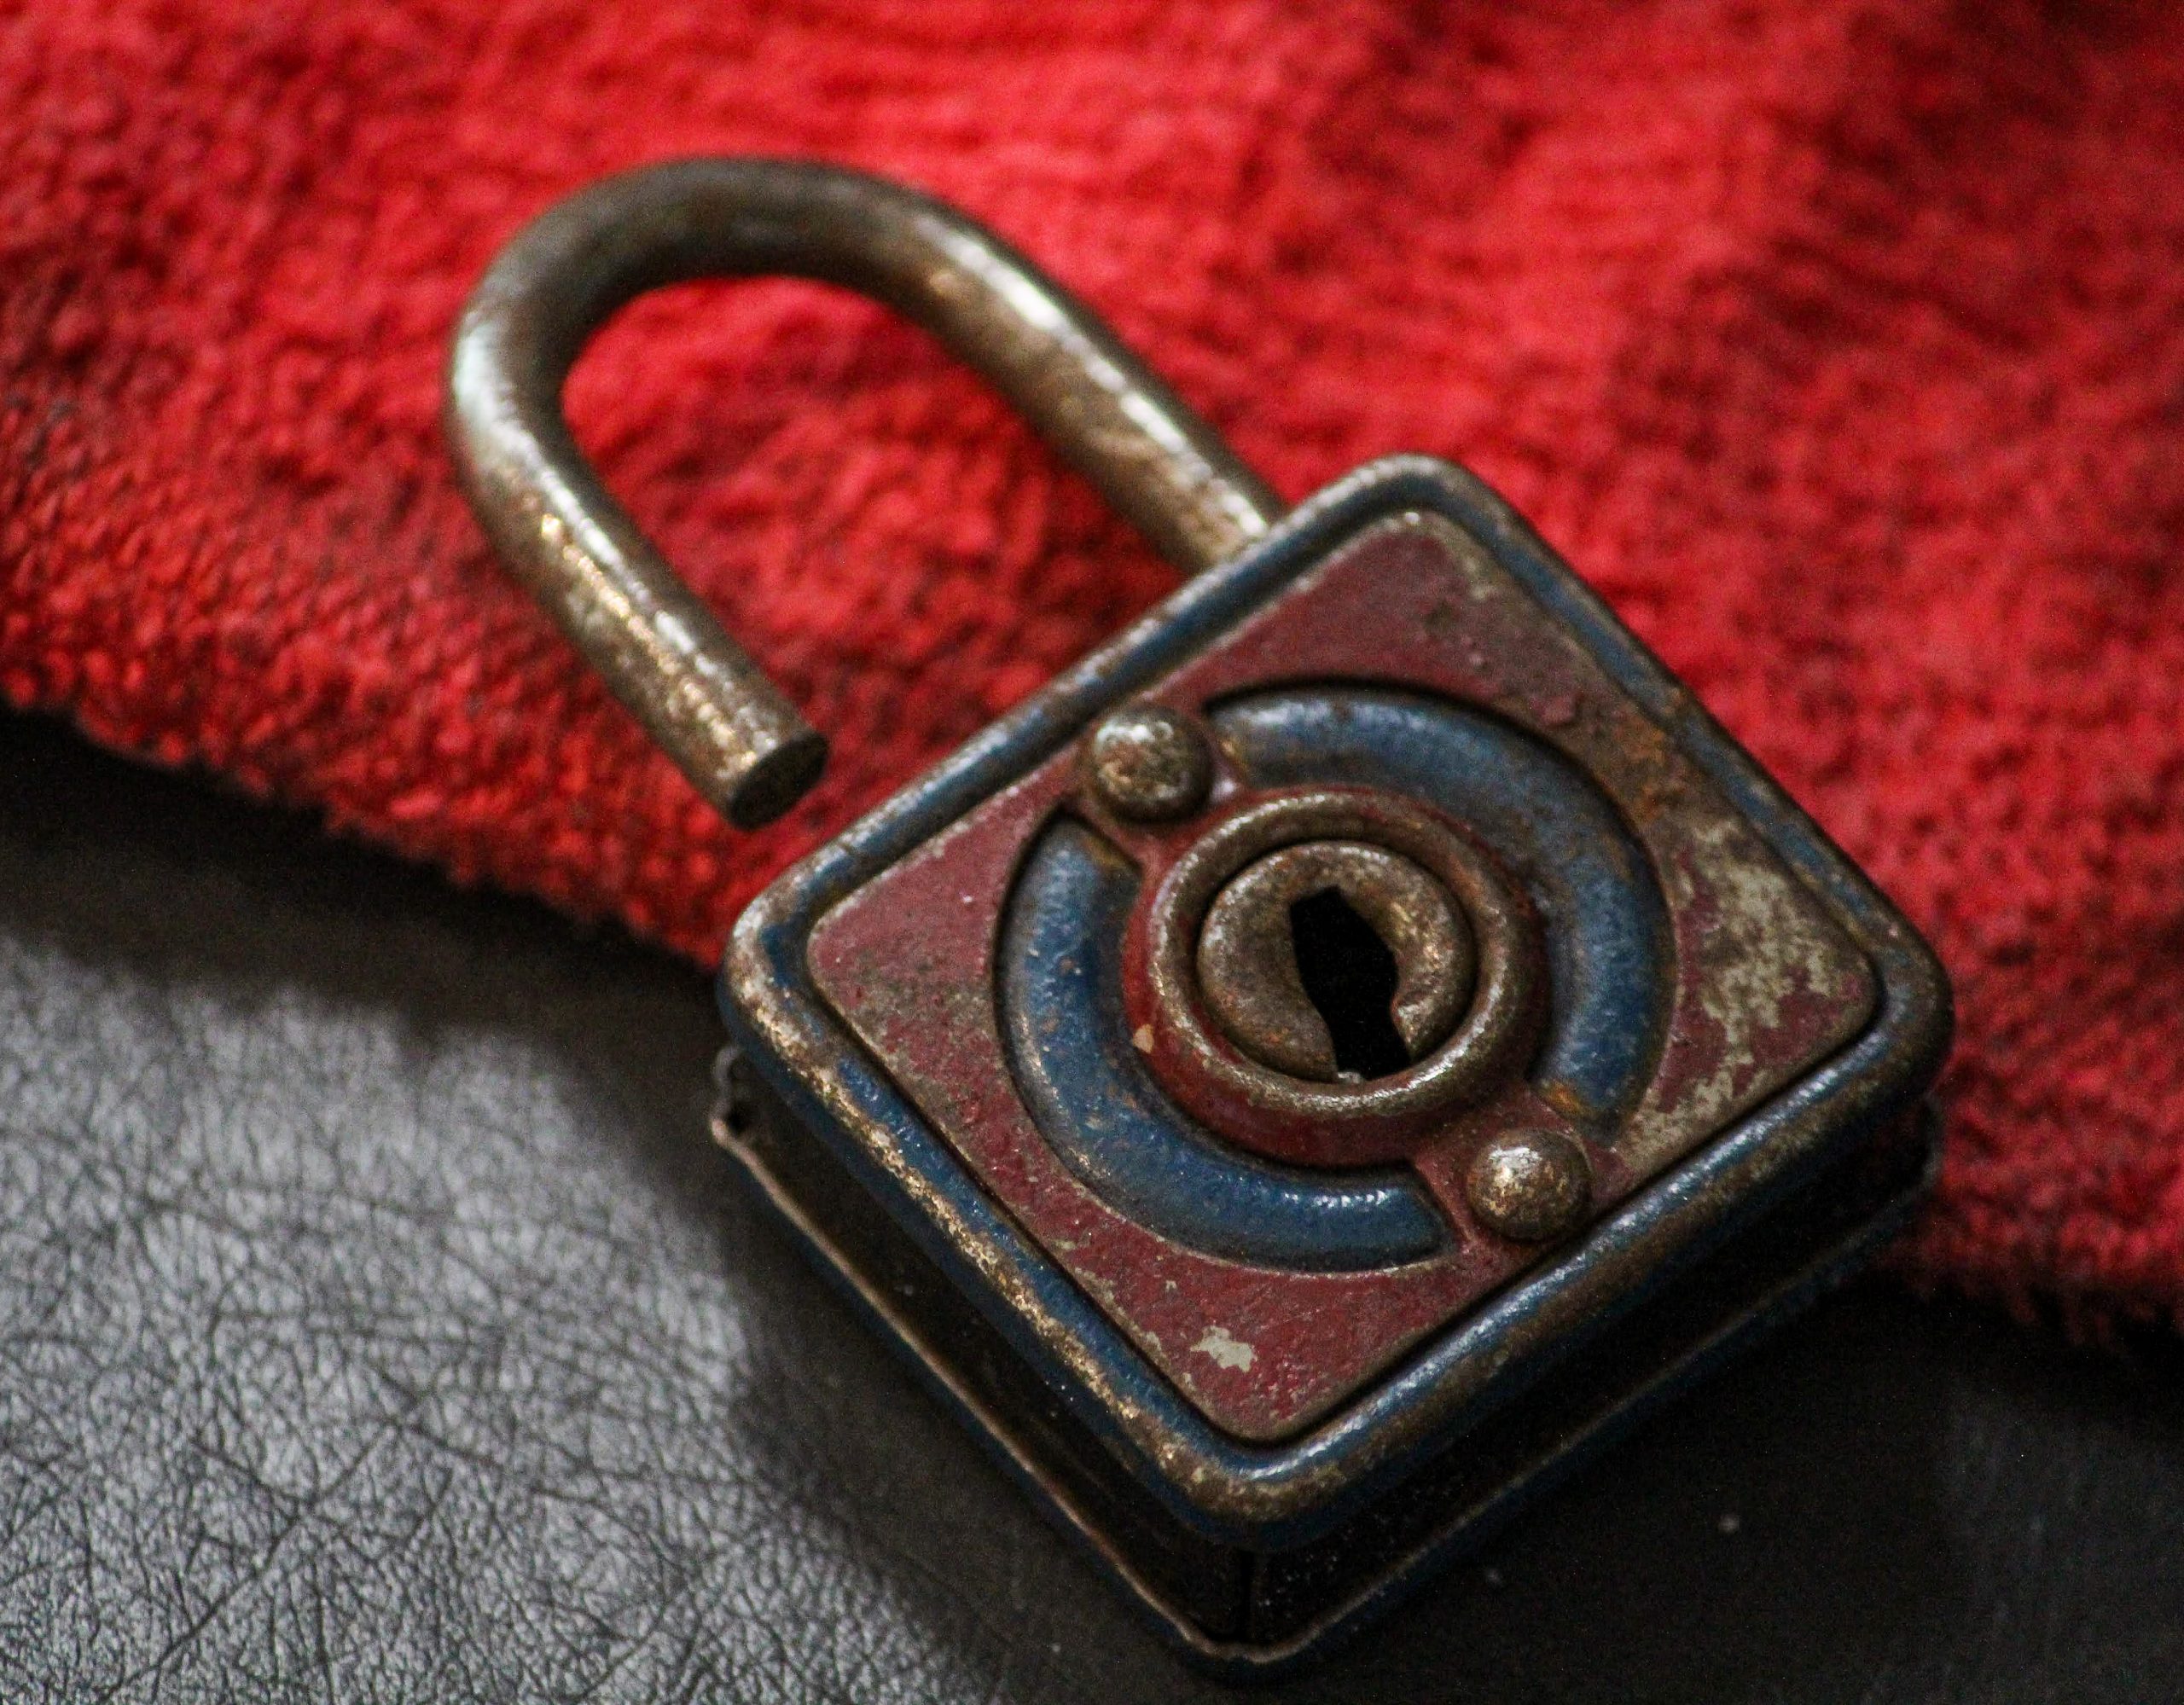 An old lock